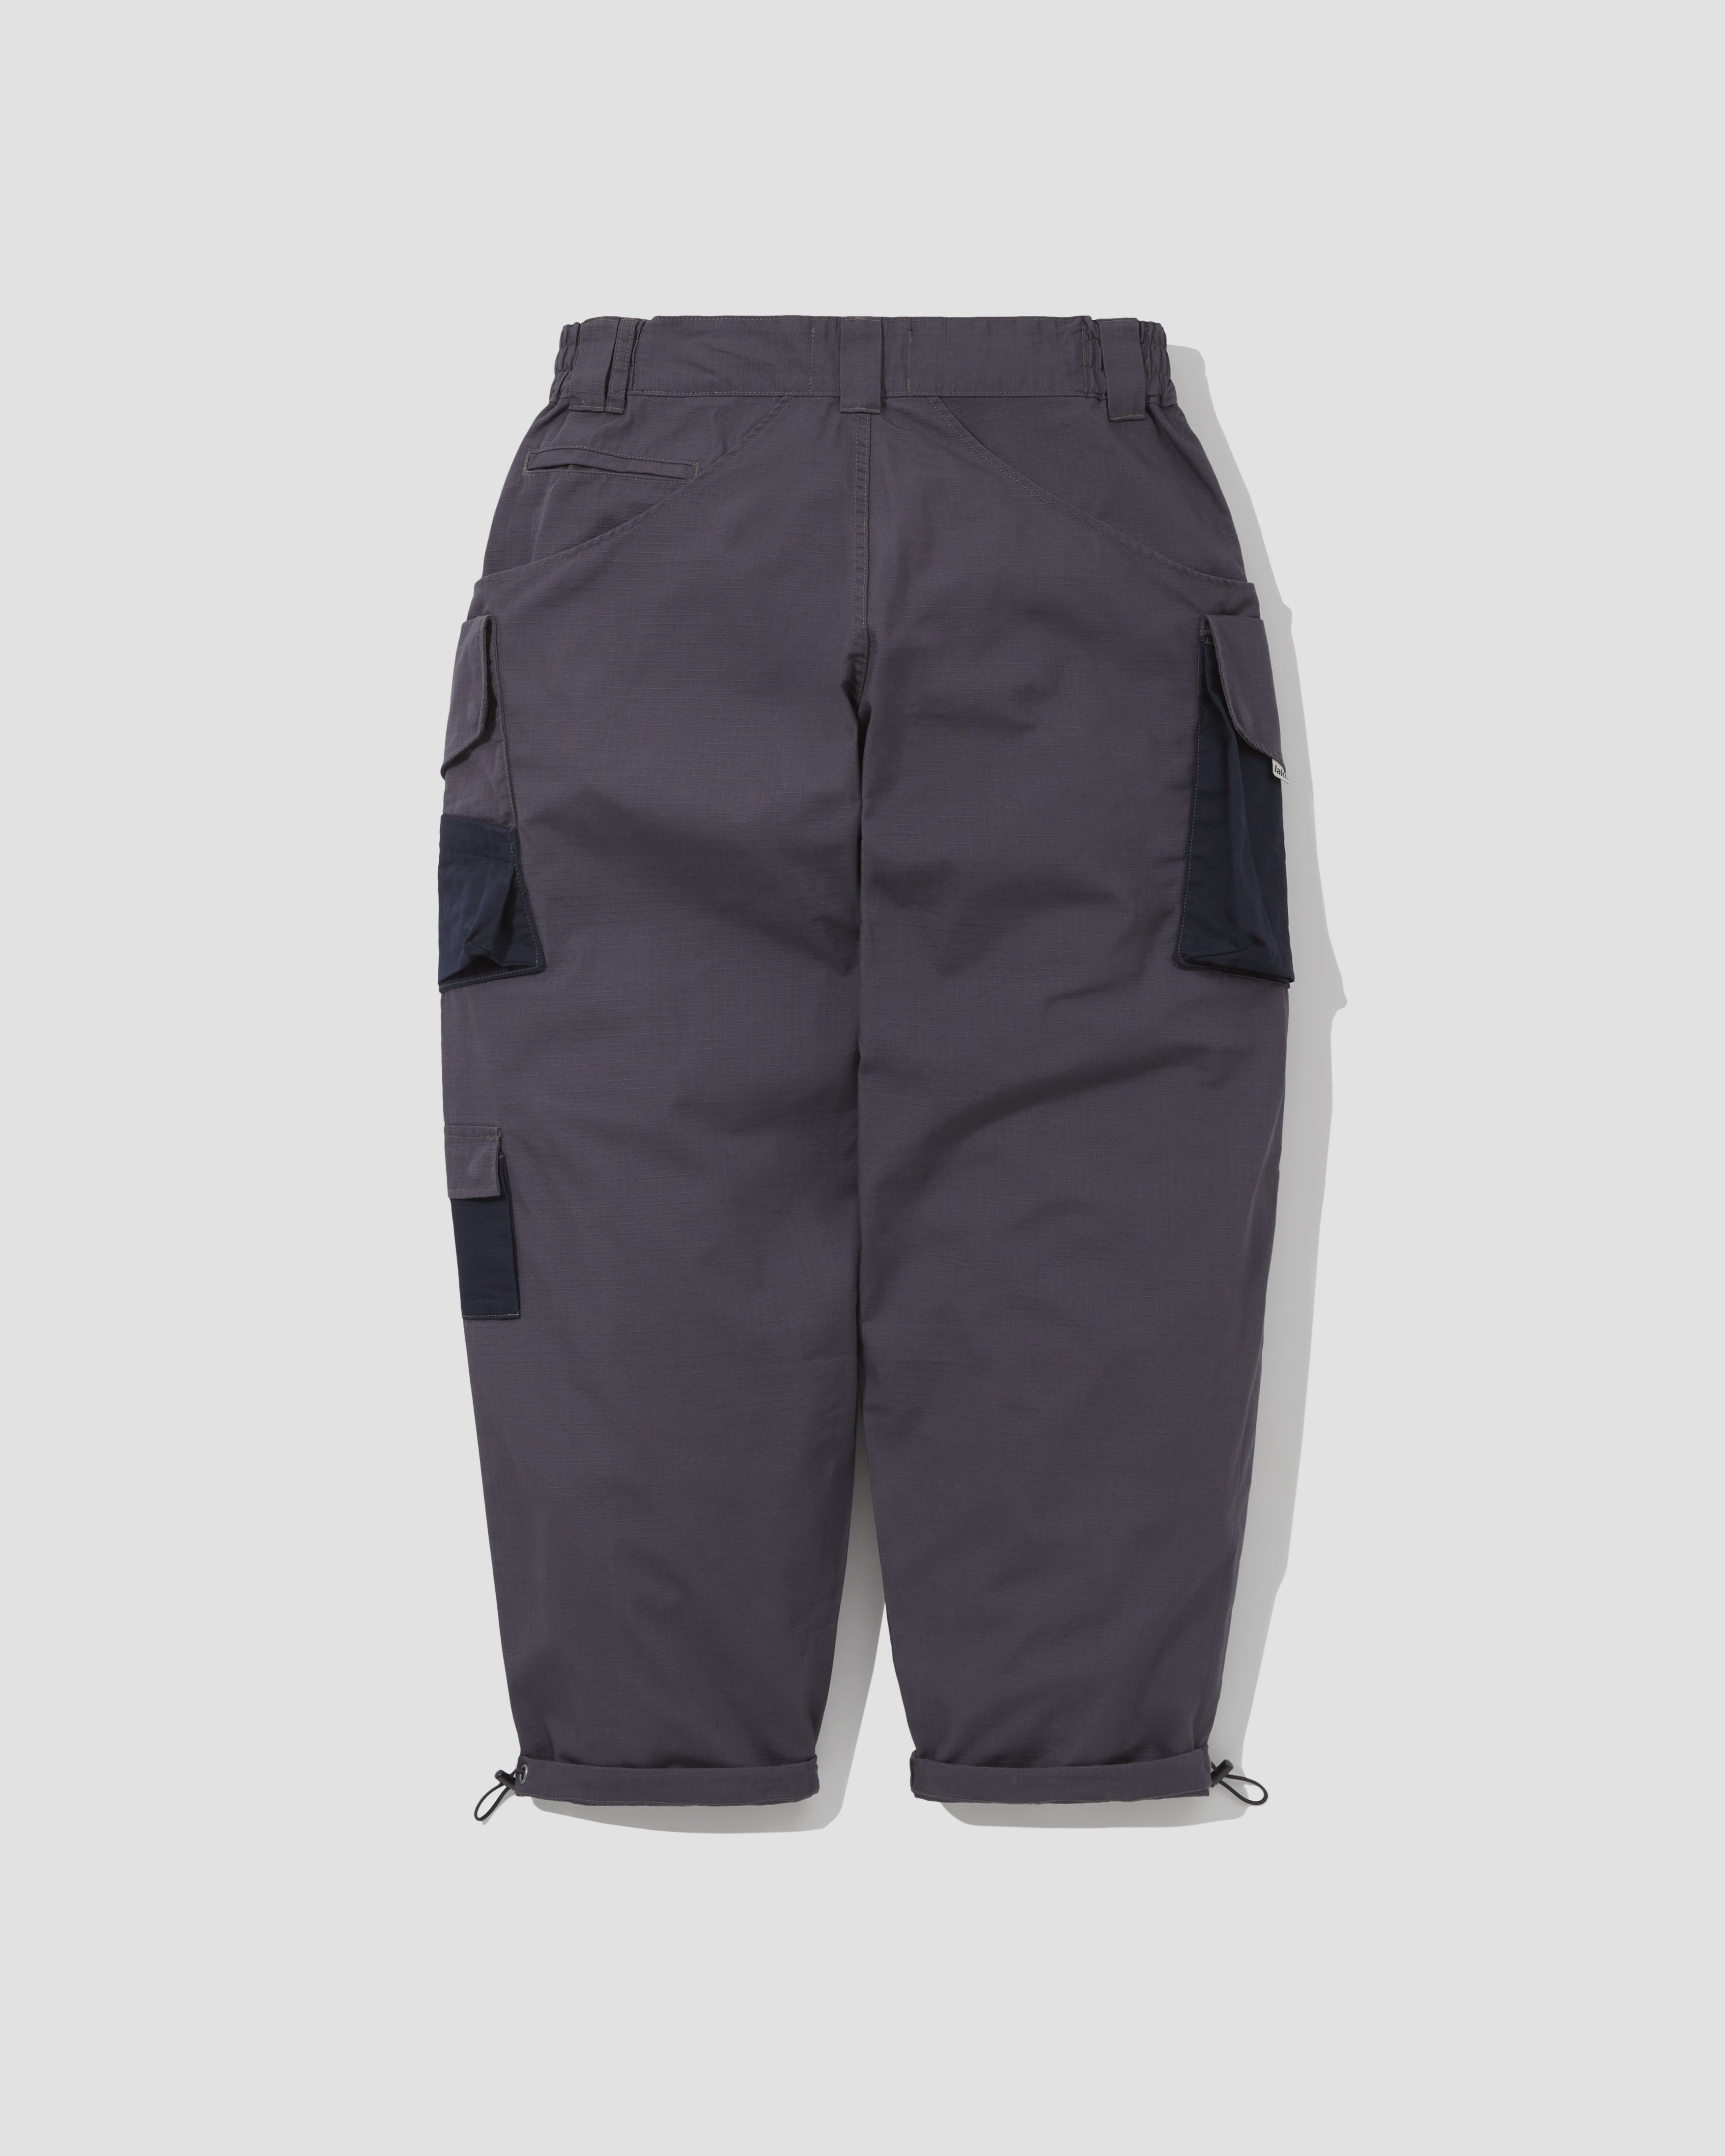 Slanted Pockets Cargo Pants - Polyester Ripstop Grey